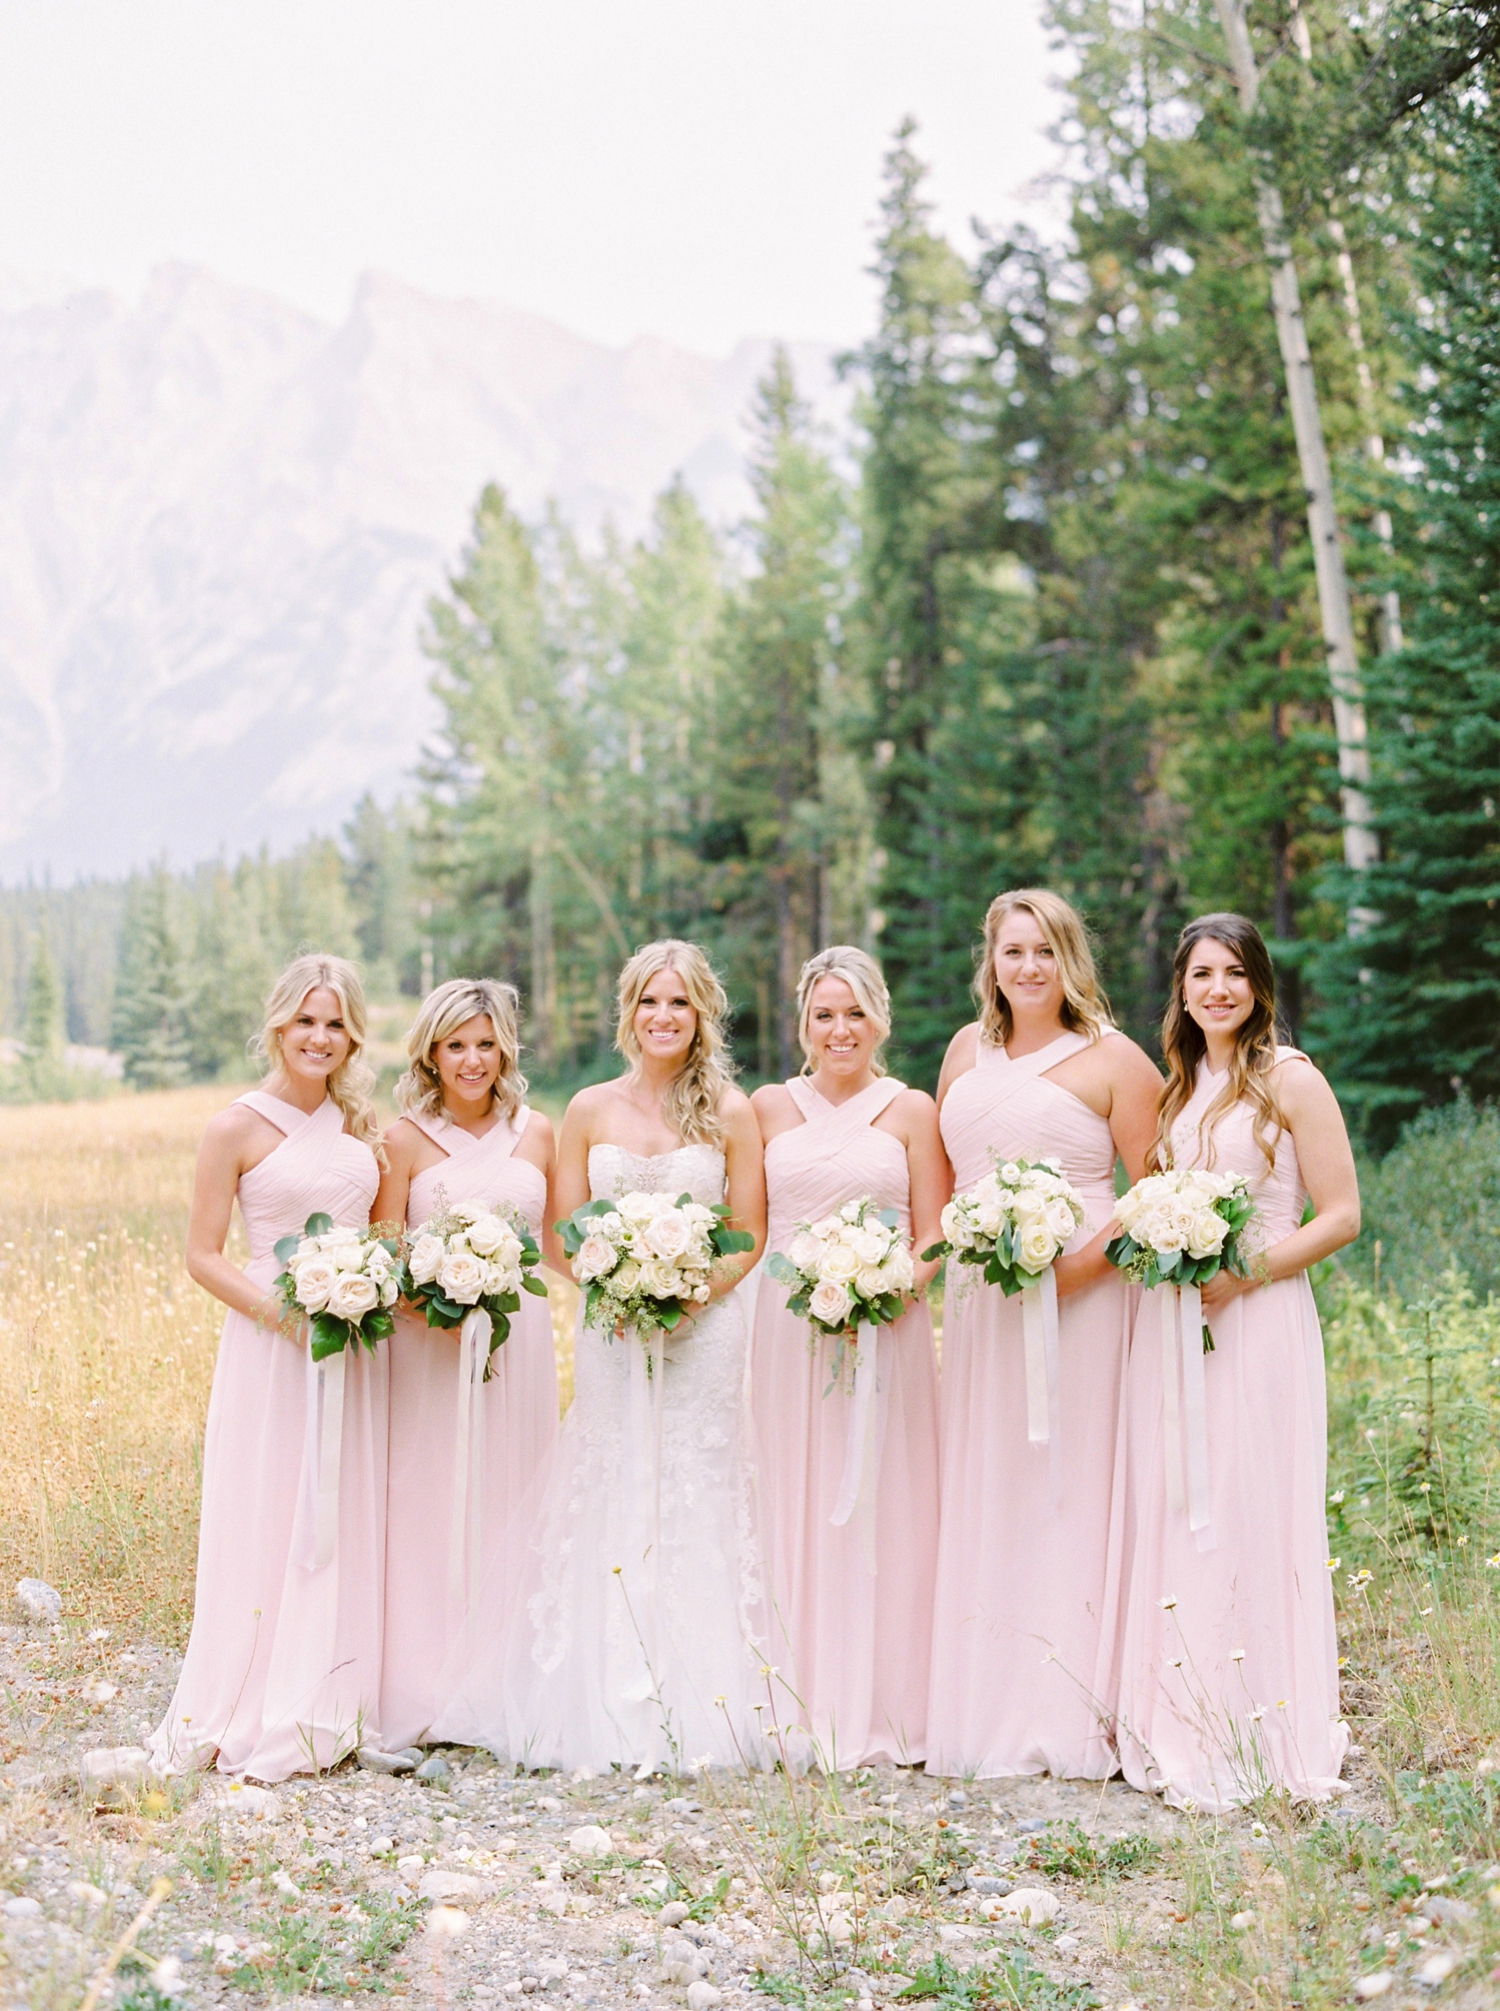 Fairmont Banff Springs Hotel wedding photographers | Justine Milton Fine Art Film Photography | Bridesmaids blush pink dresses